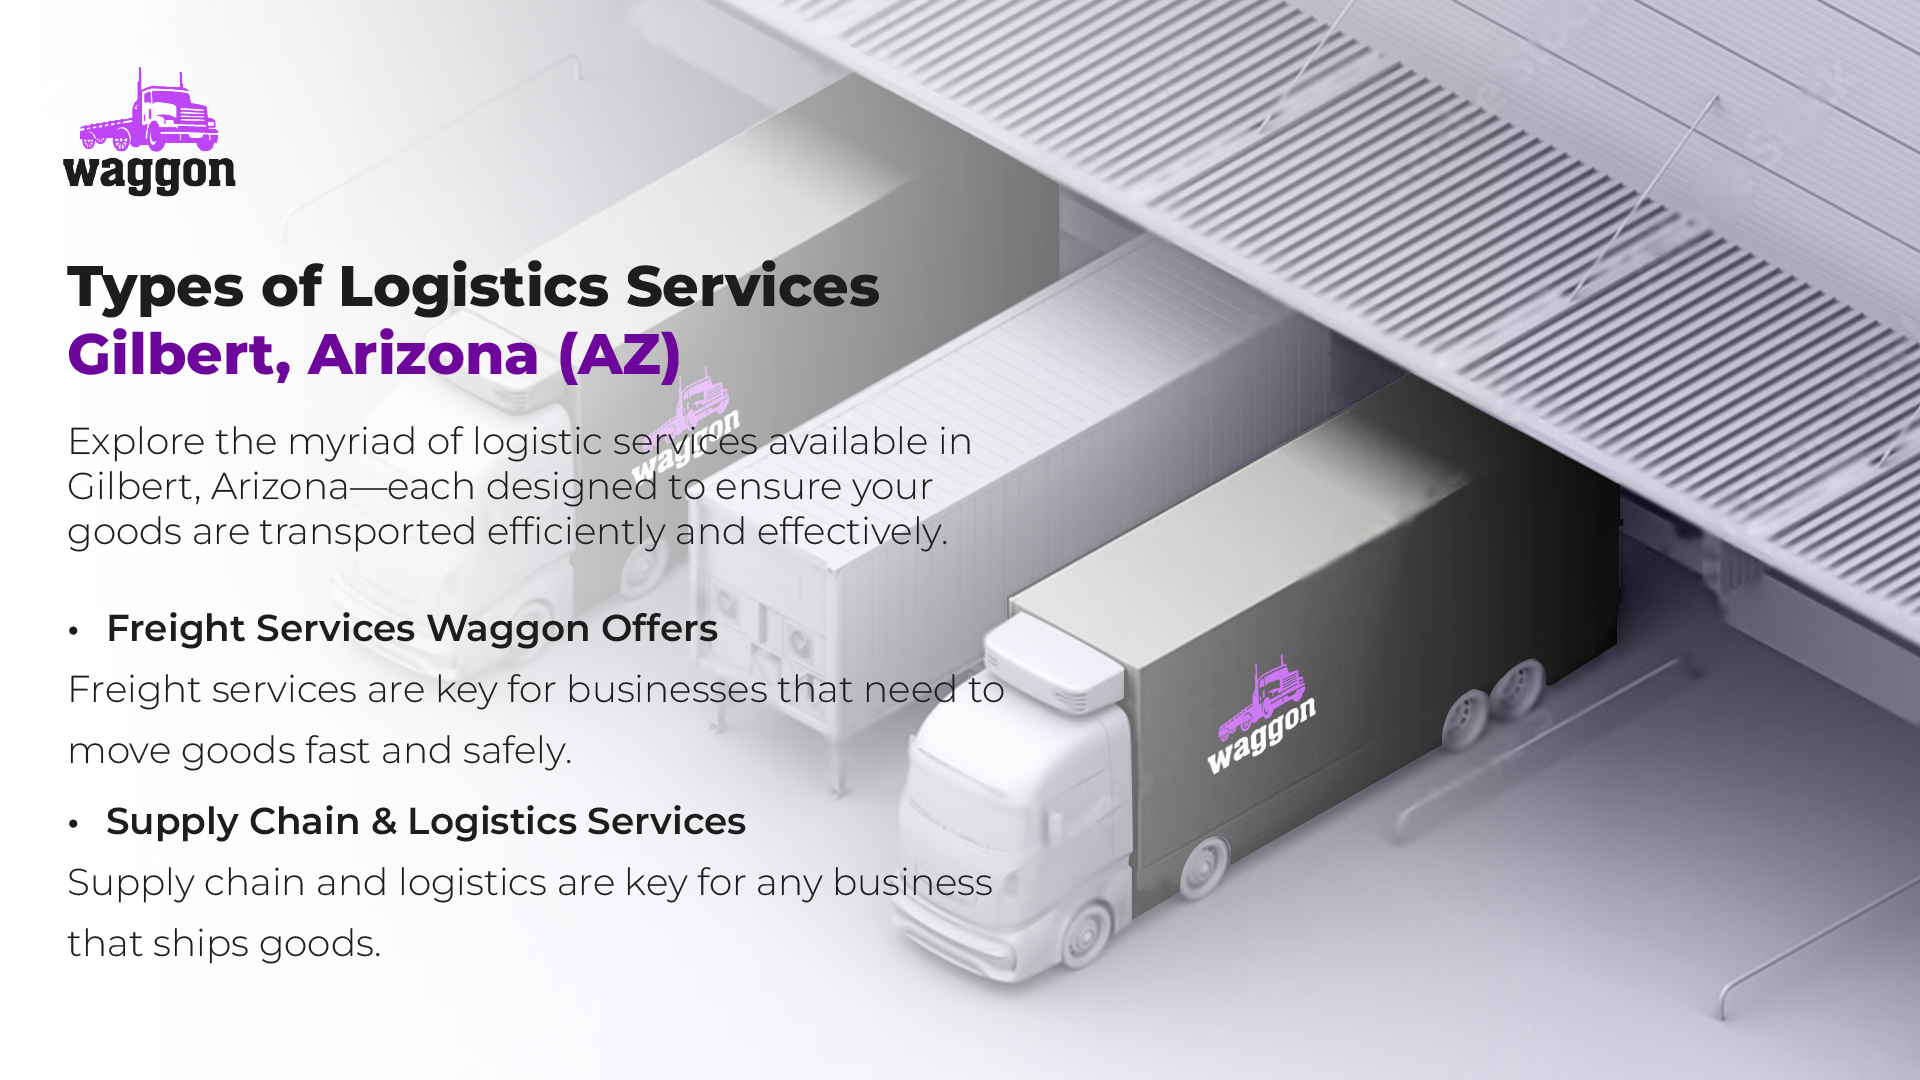 Types of Logistics Services in Gilbert, Arizona (AZ)